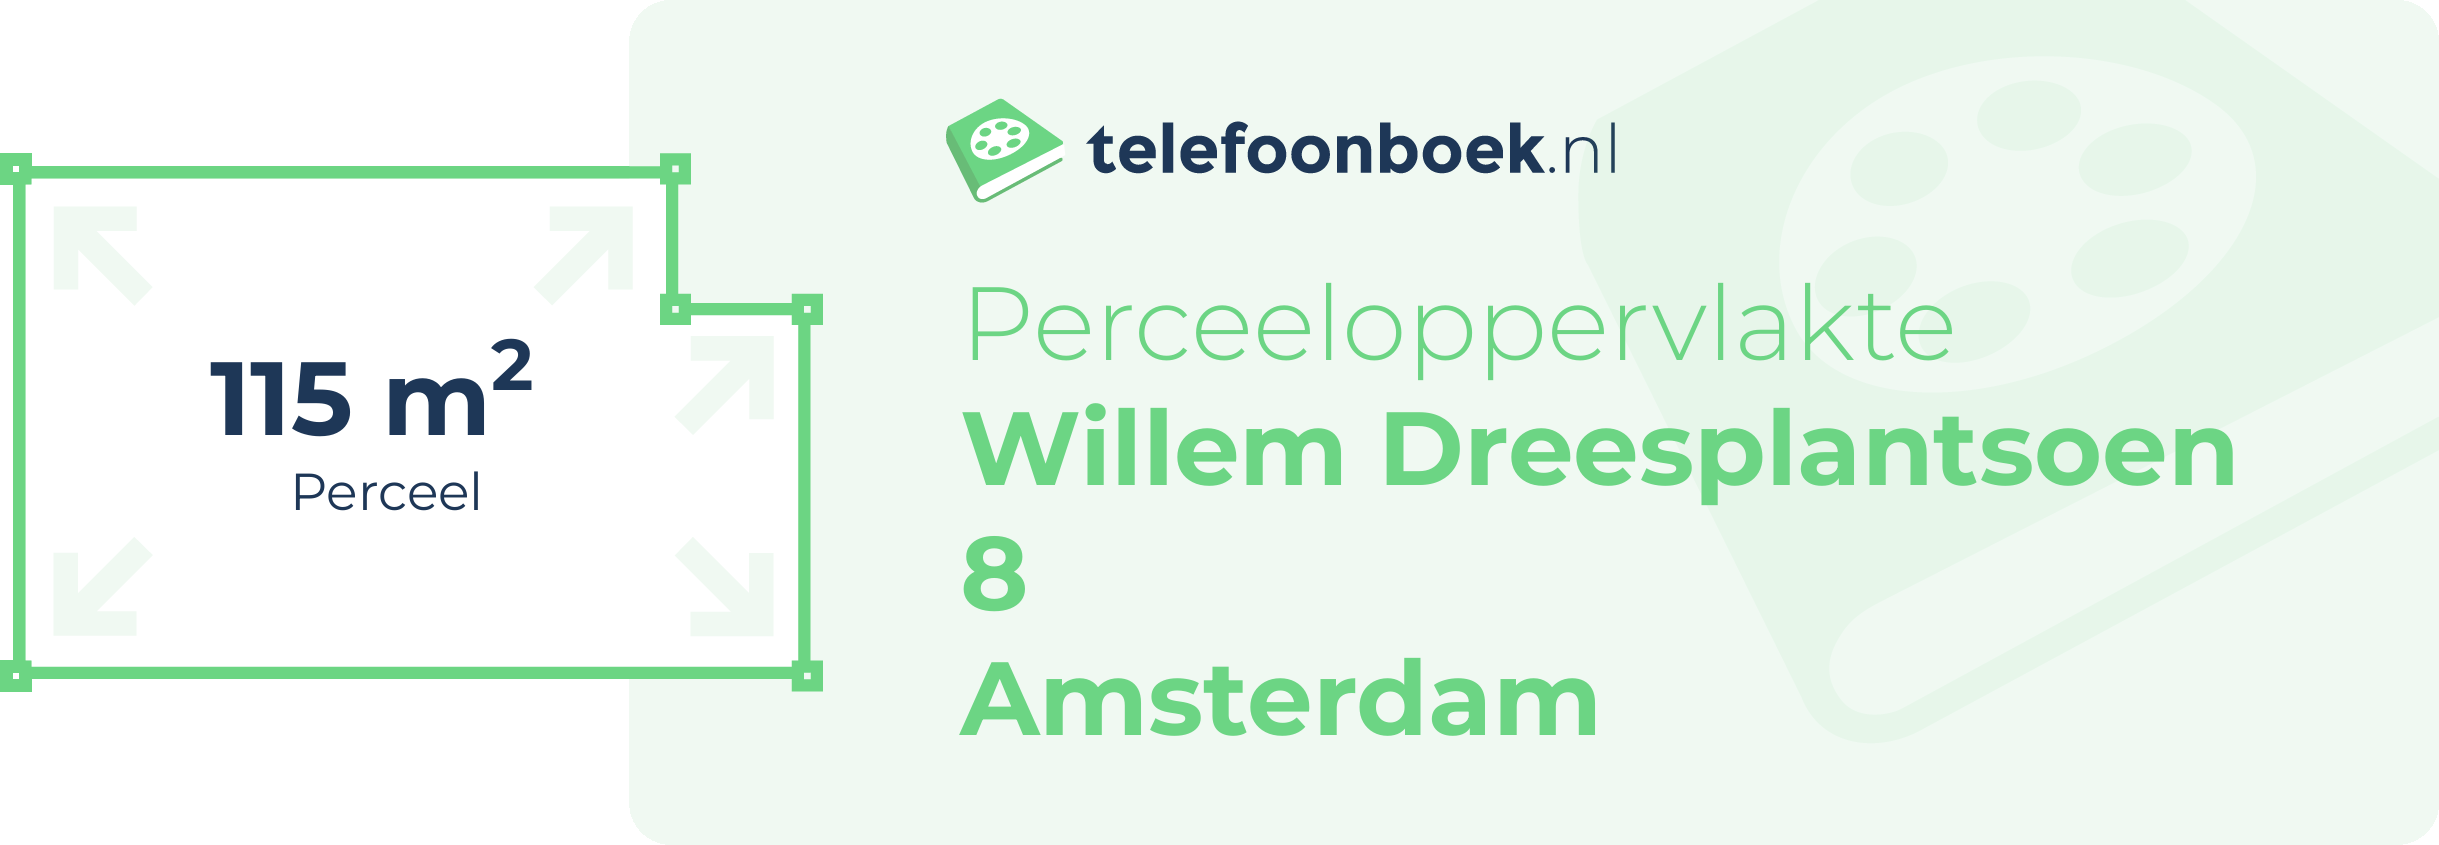 Perceeloppervlakte Willem Dreesplantsoen 8 Amsterdam